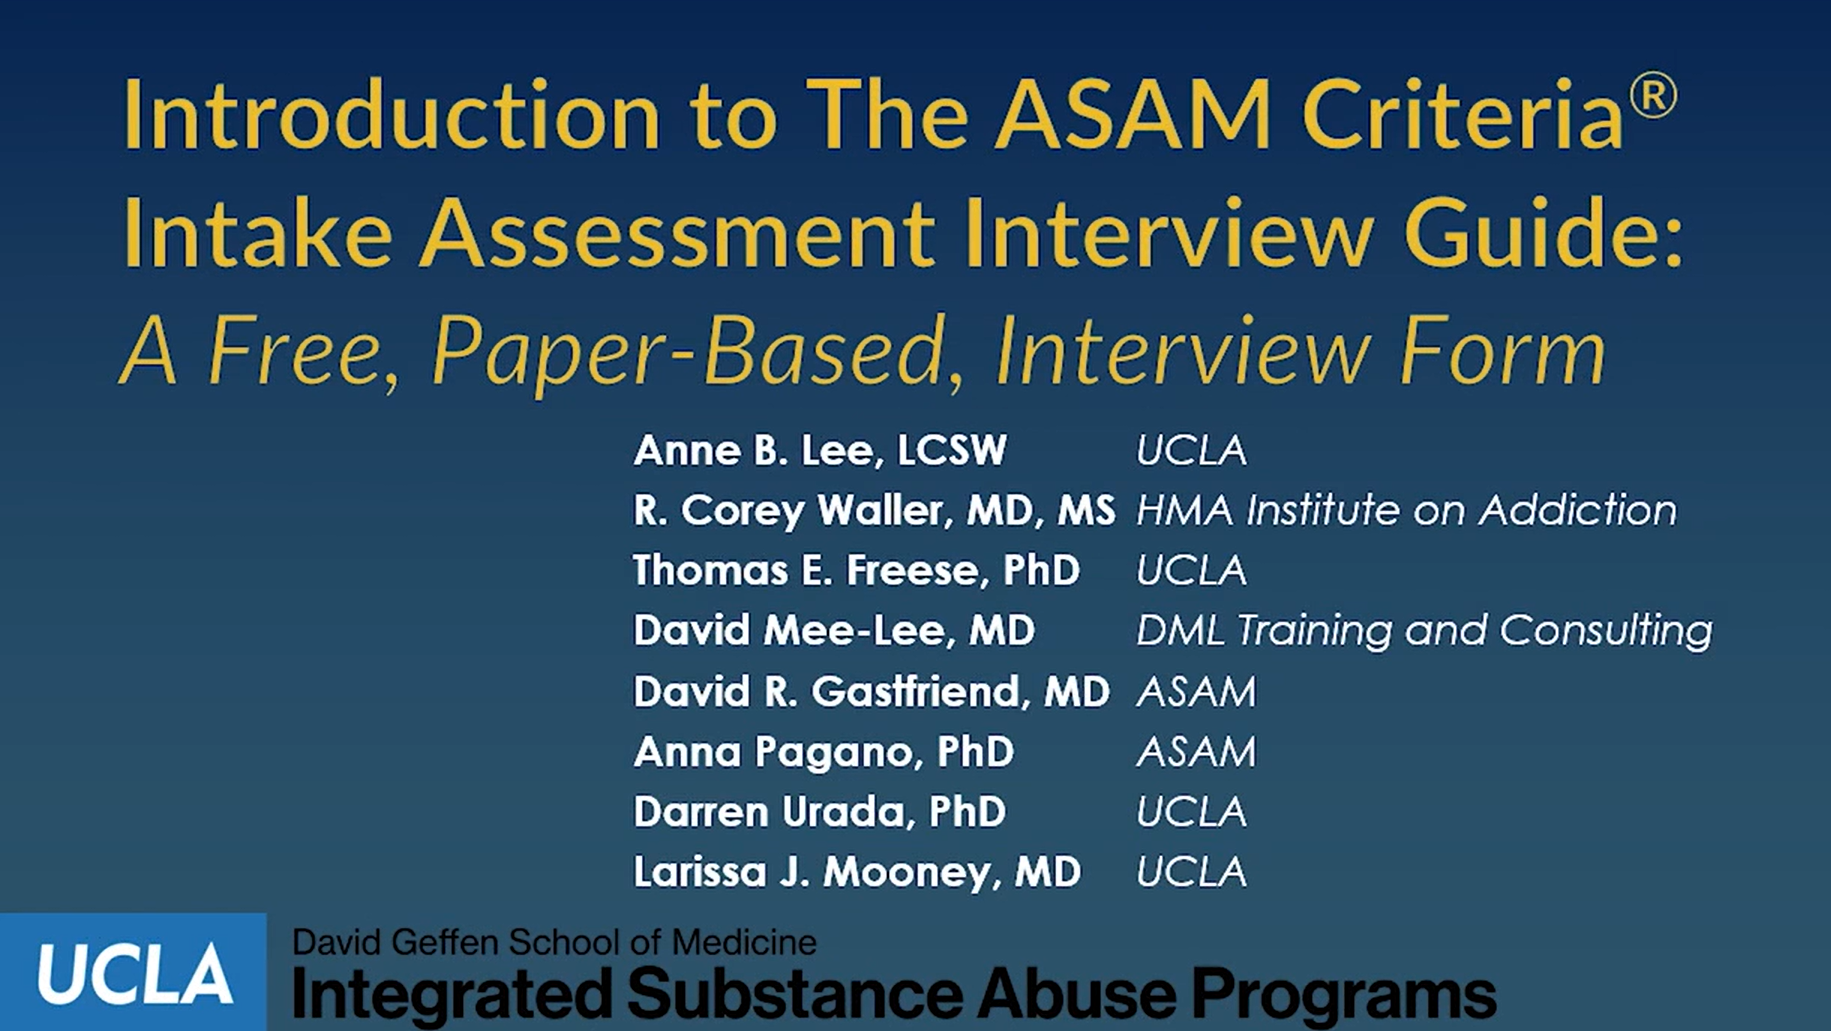 ASAM Criteria Intake Assessment Interview Guide Video Screenshot